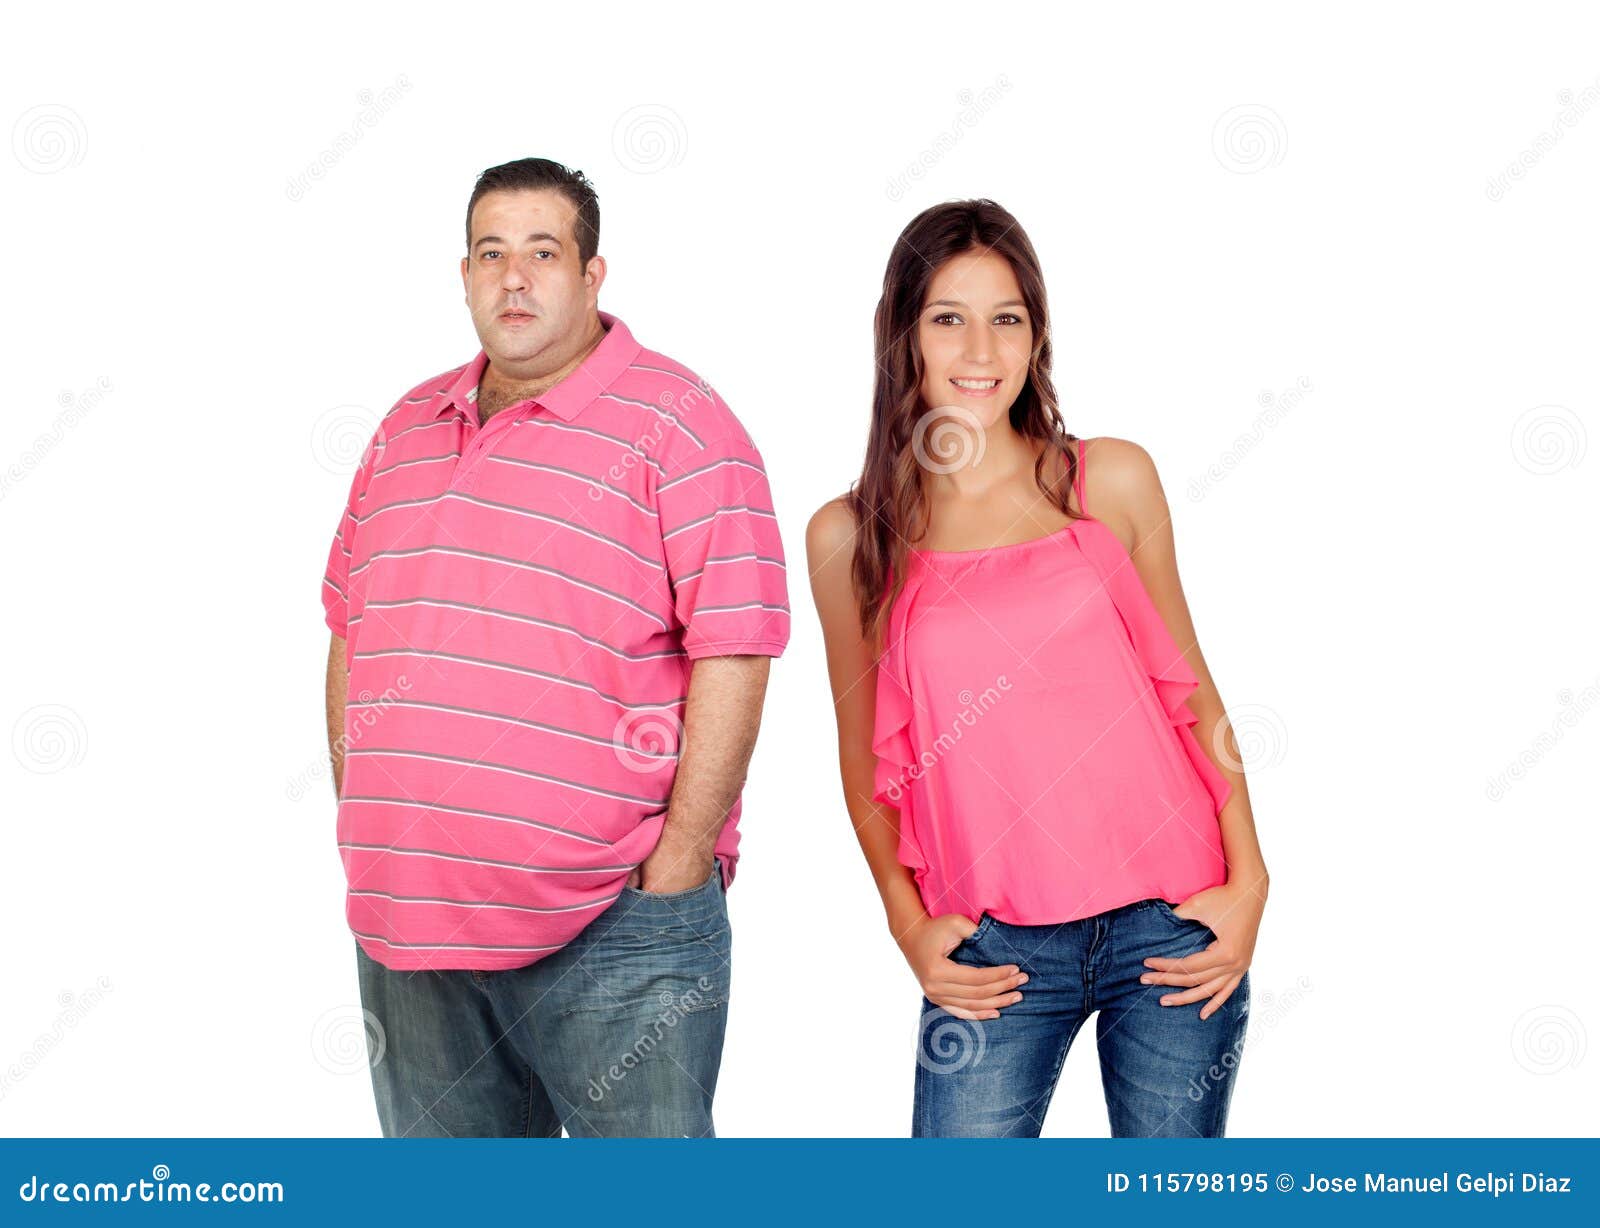 adam haworth recommends fat girl skinny boy pic